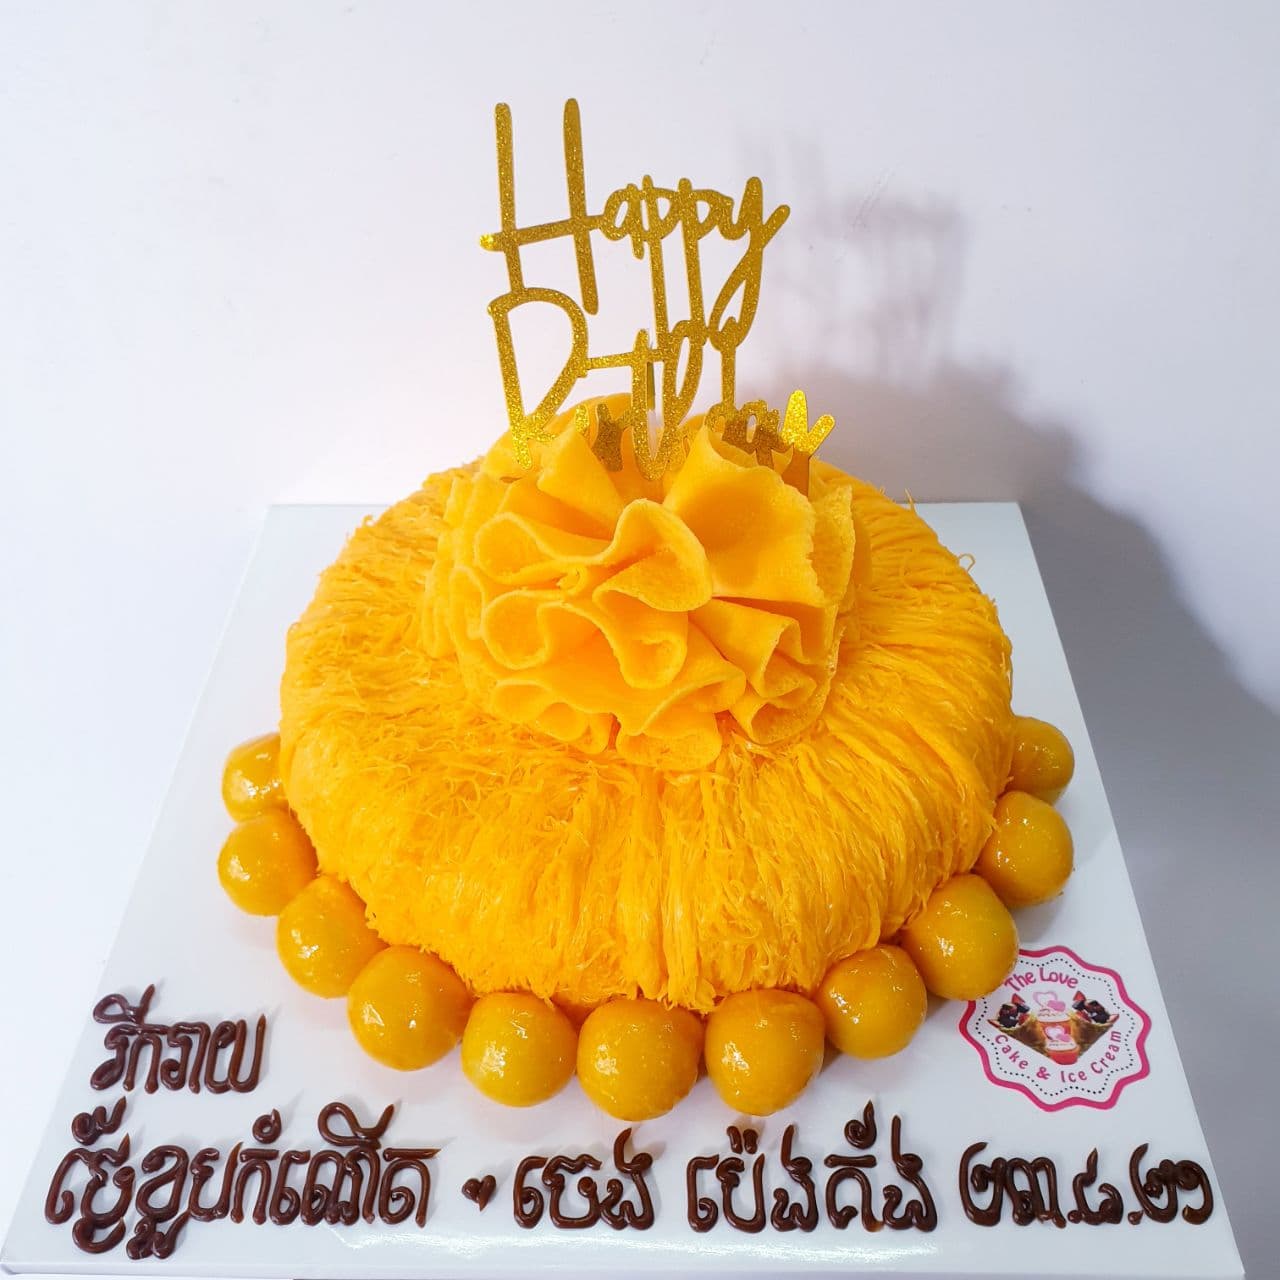 03.Round golden fiber cake